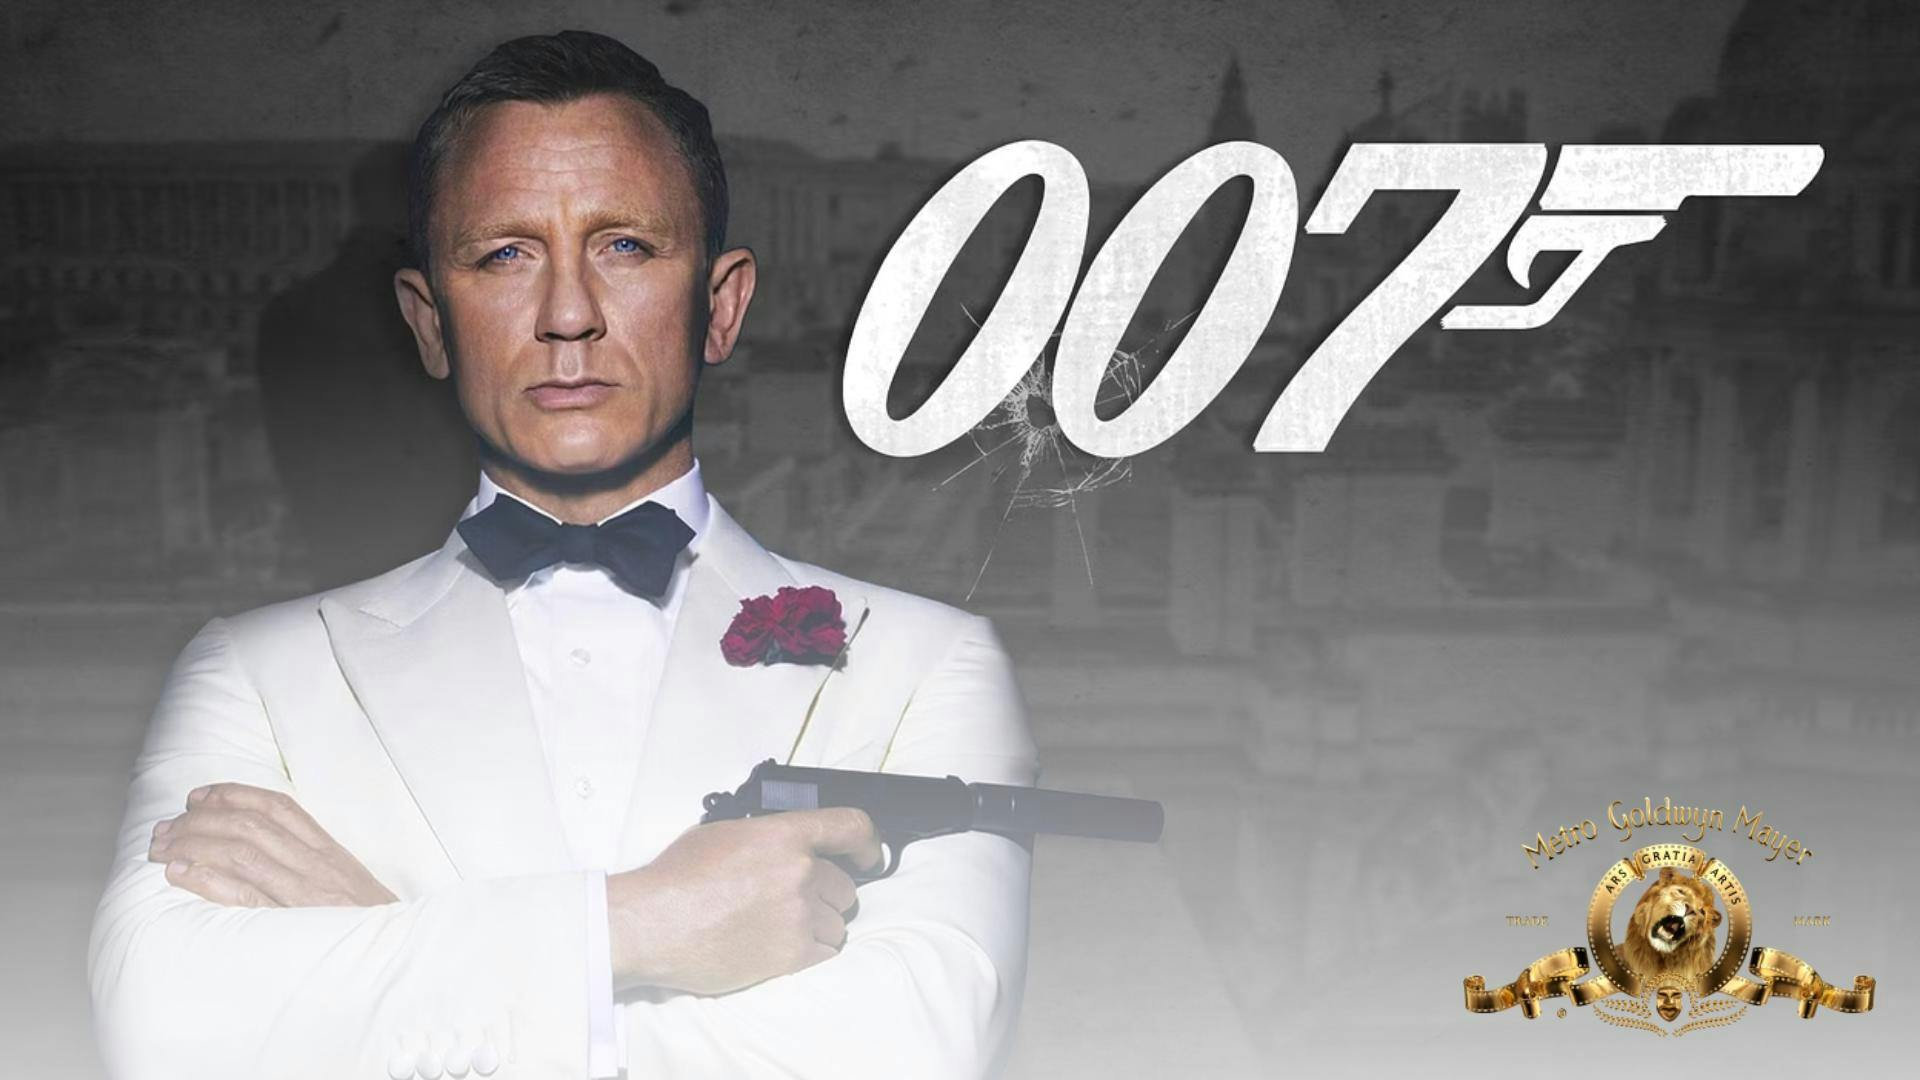 poster du film James Bond produit par Metro-Goldwyn-Mayer Studio